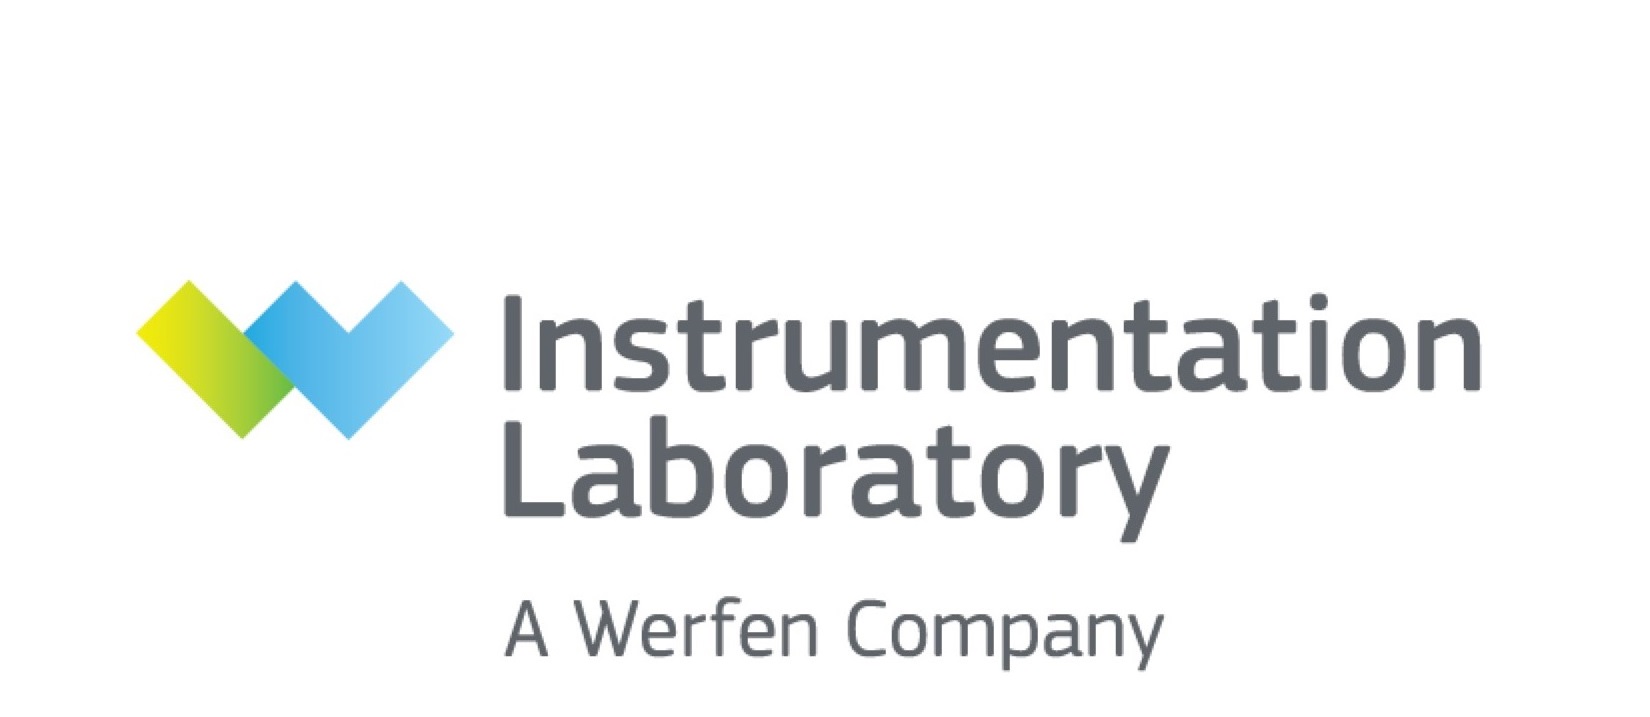 Instrumentation Laboratory